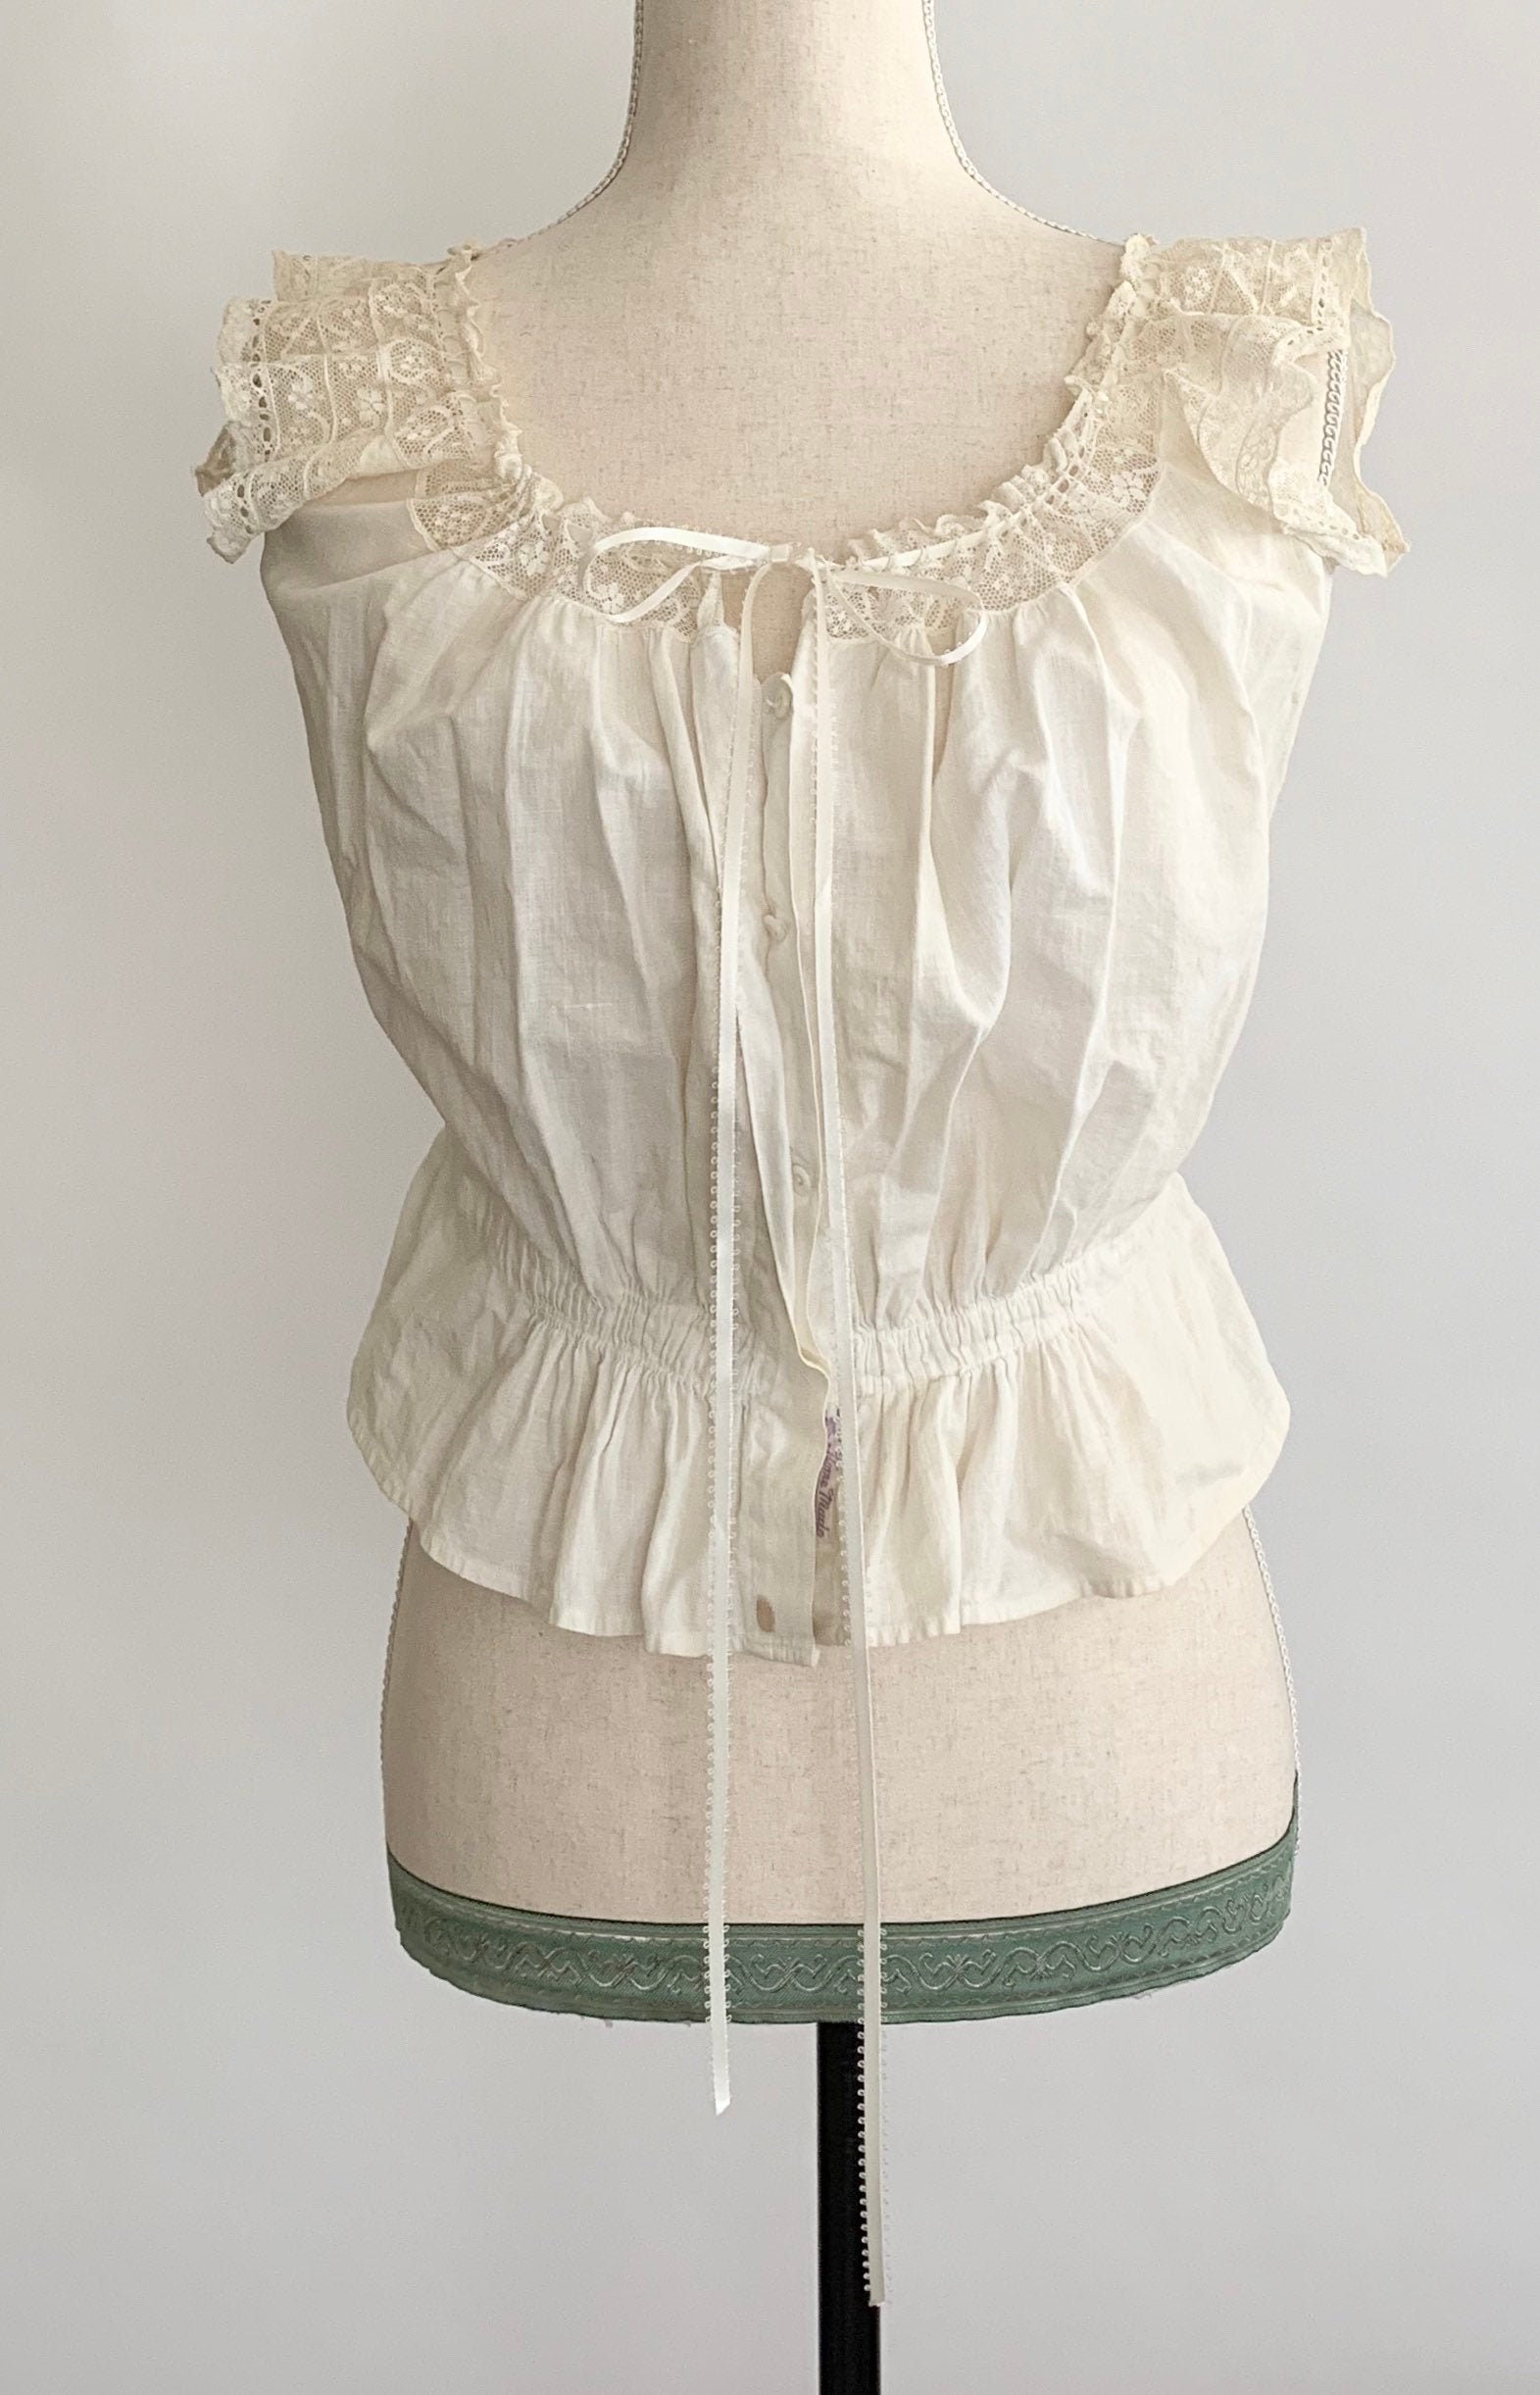 Antique Victorian Corset Cover Sleeveless Top Blouse Handmade